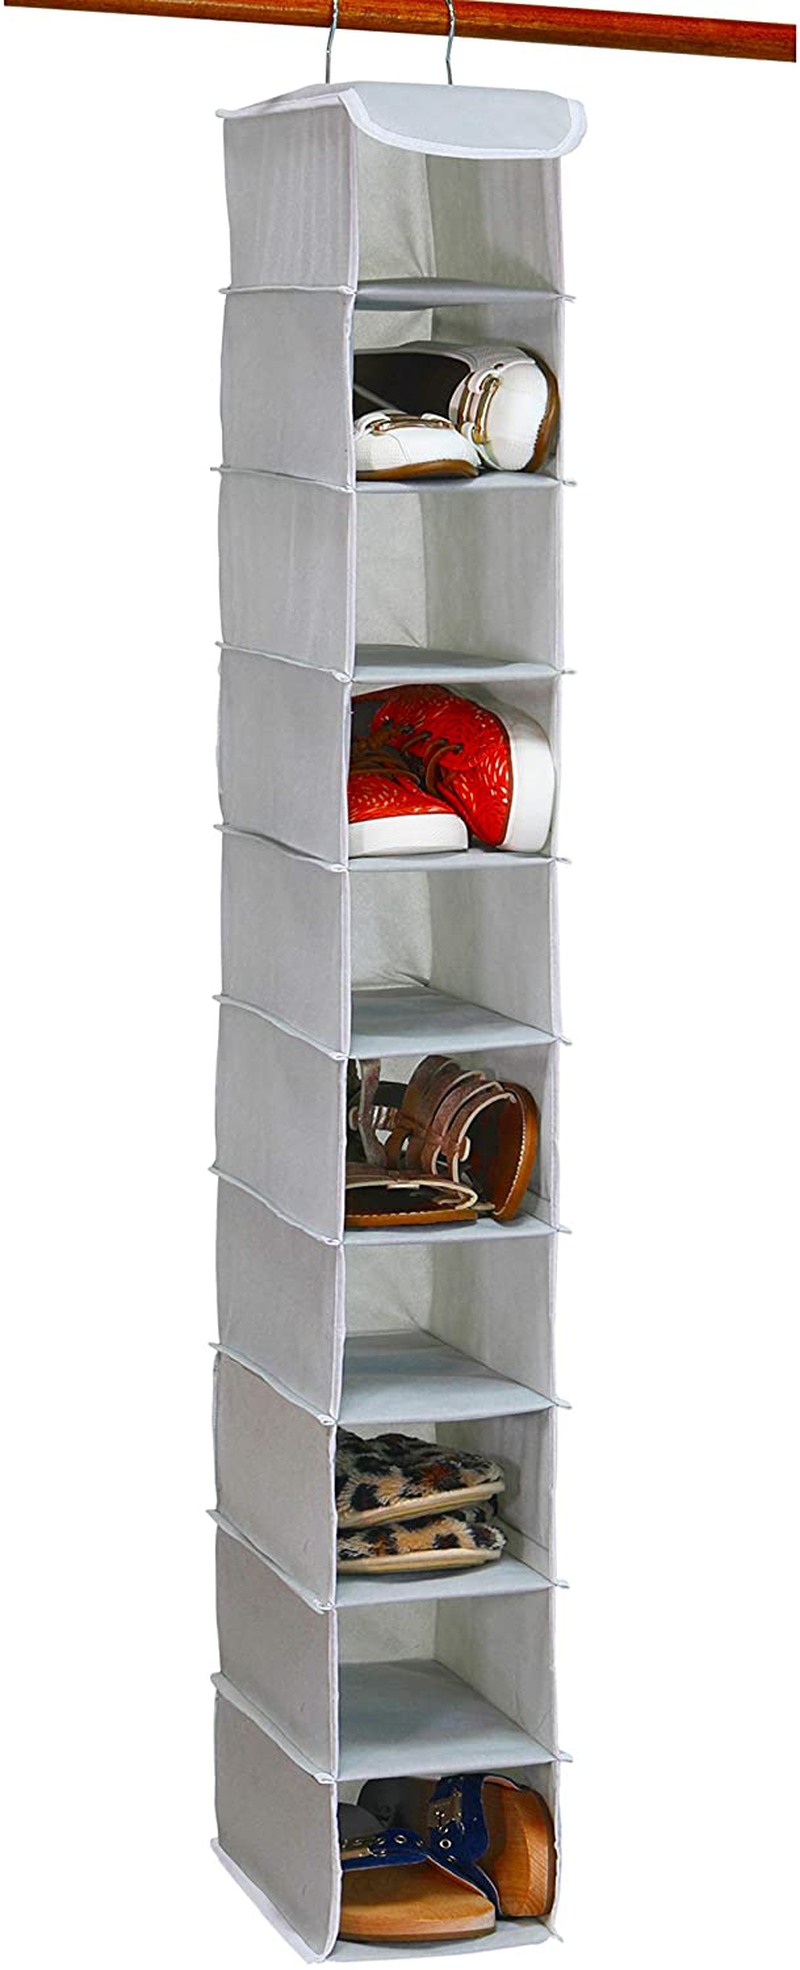 Simple Houseware 10 Shelves Hanging Shoes Organizer Holder for Closet, Grey